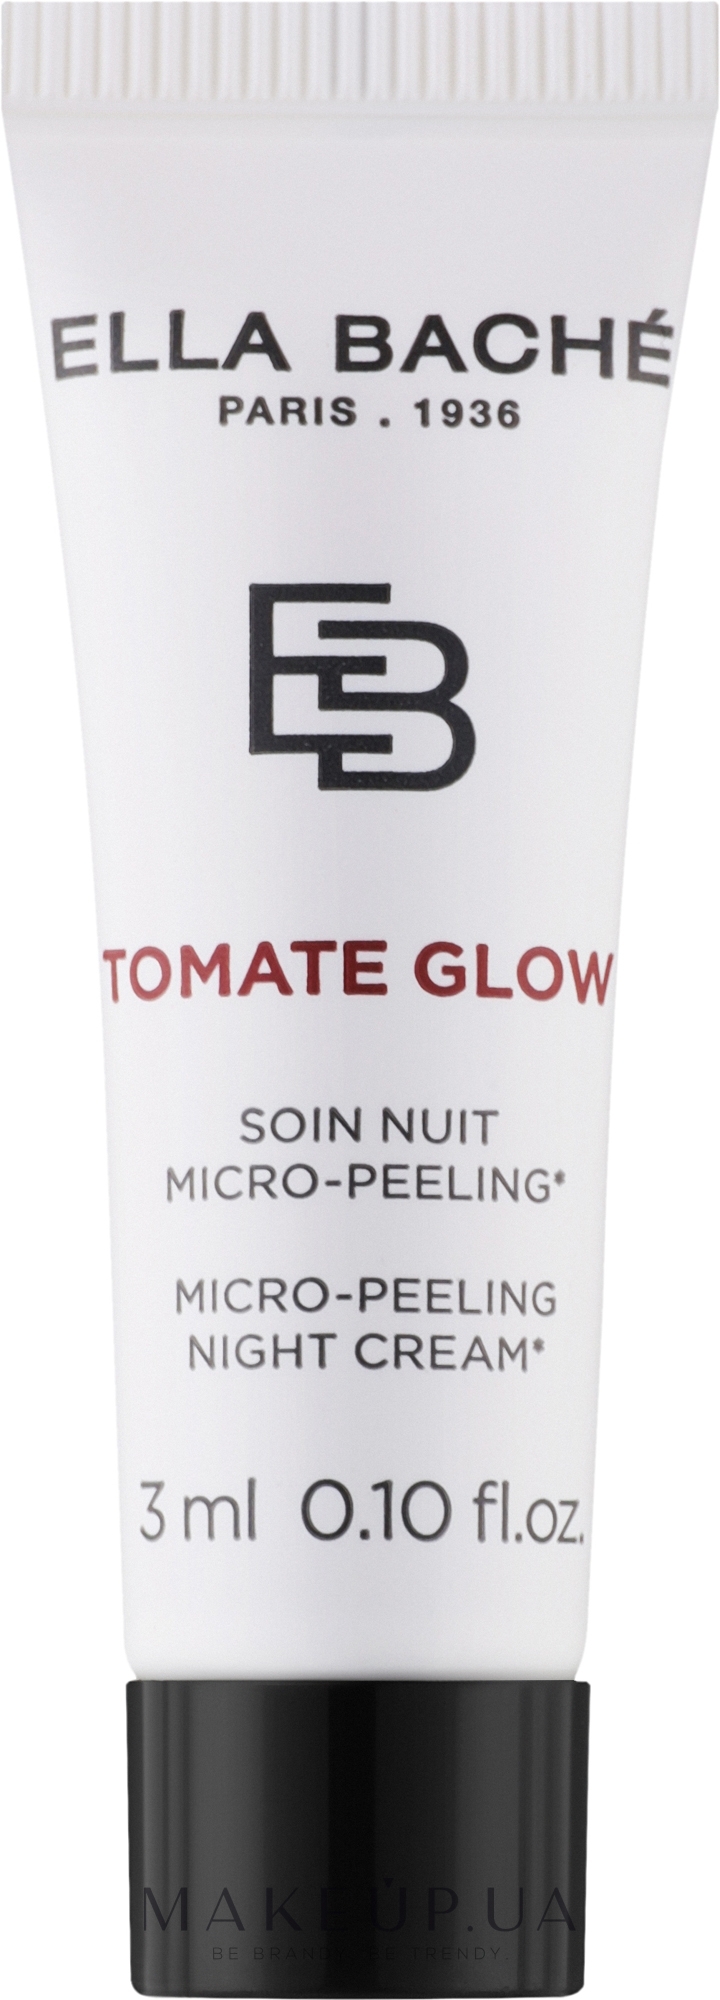 Микро-пилинг ночной крем - Ella Bache Tomate Glow Micro-Peeling Night Cream (пробник) — фото 3ml